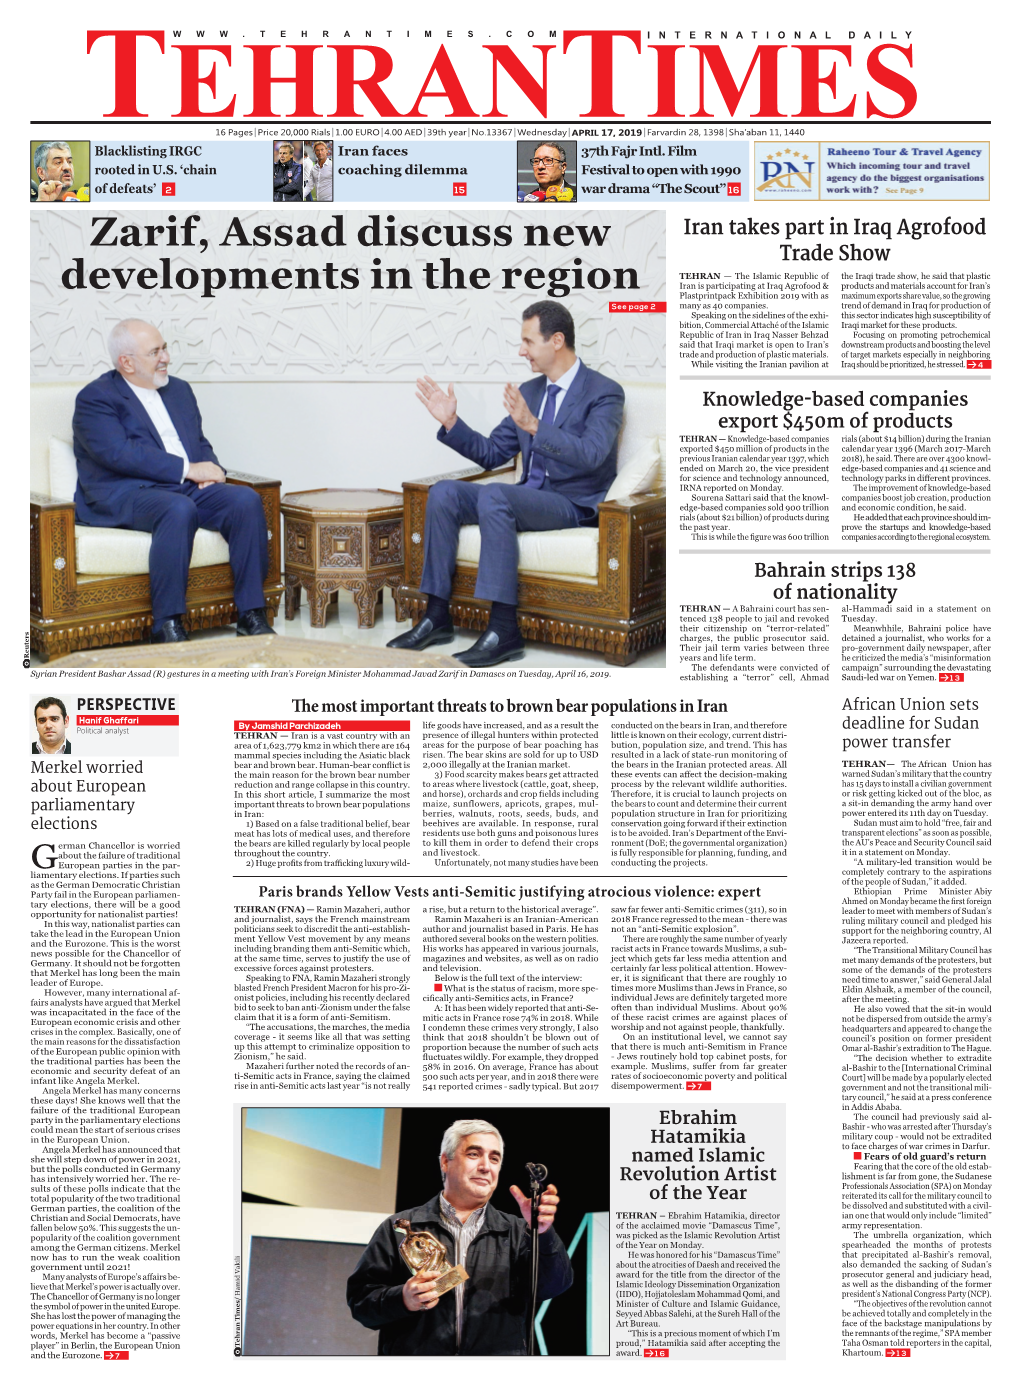 Zarif, Assad Discuss New Developments in the Region Dismiss Him?” the Mps Asked